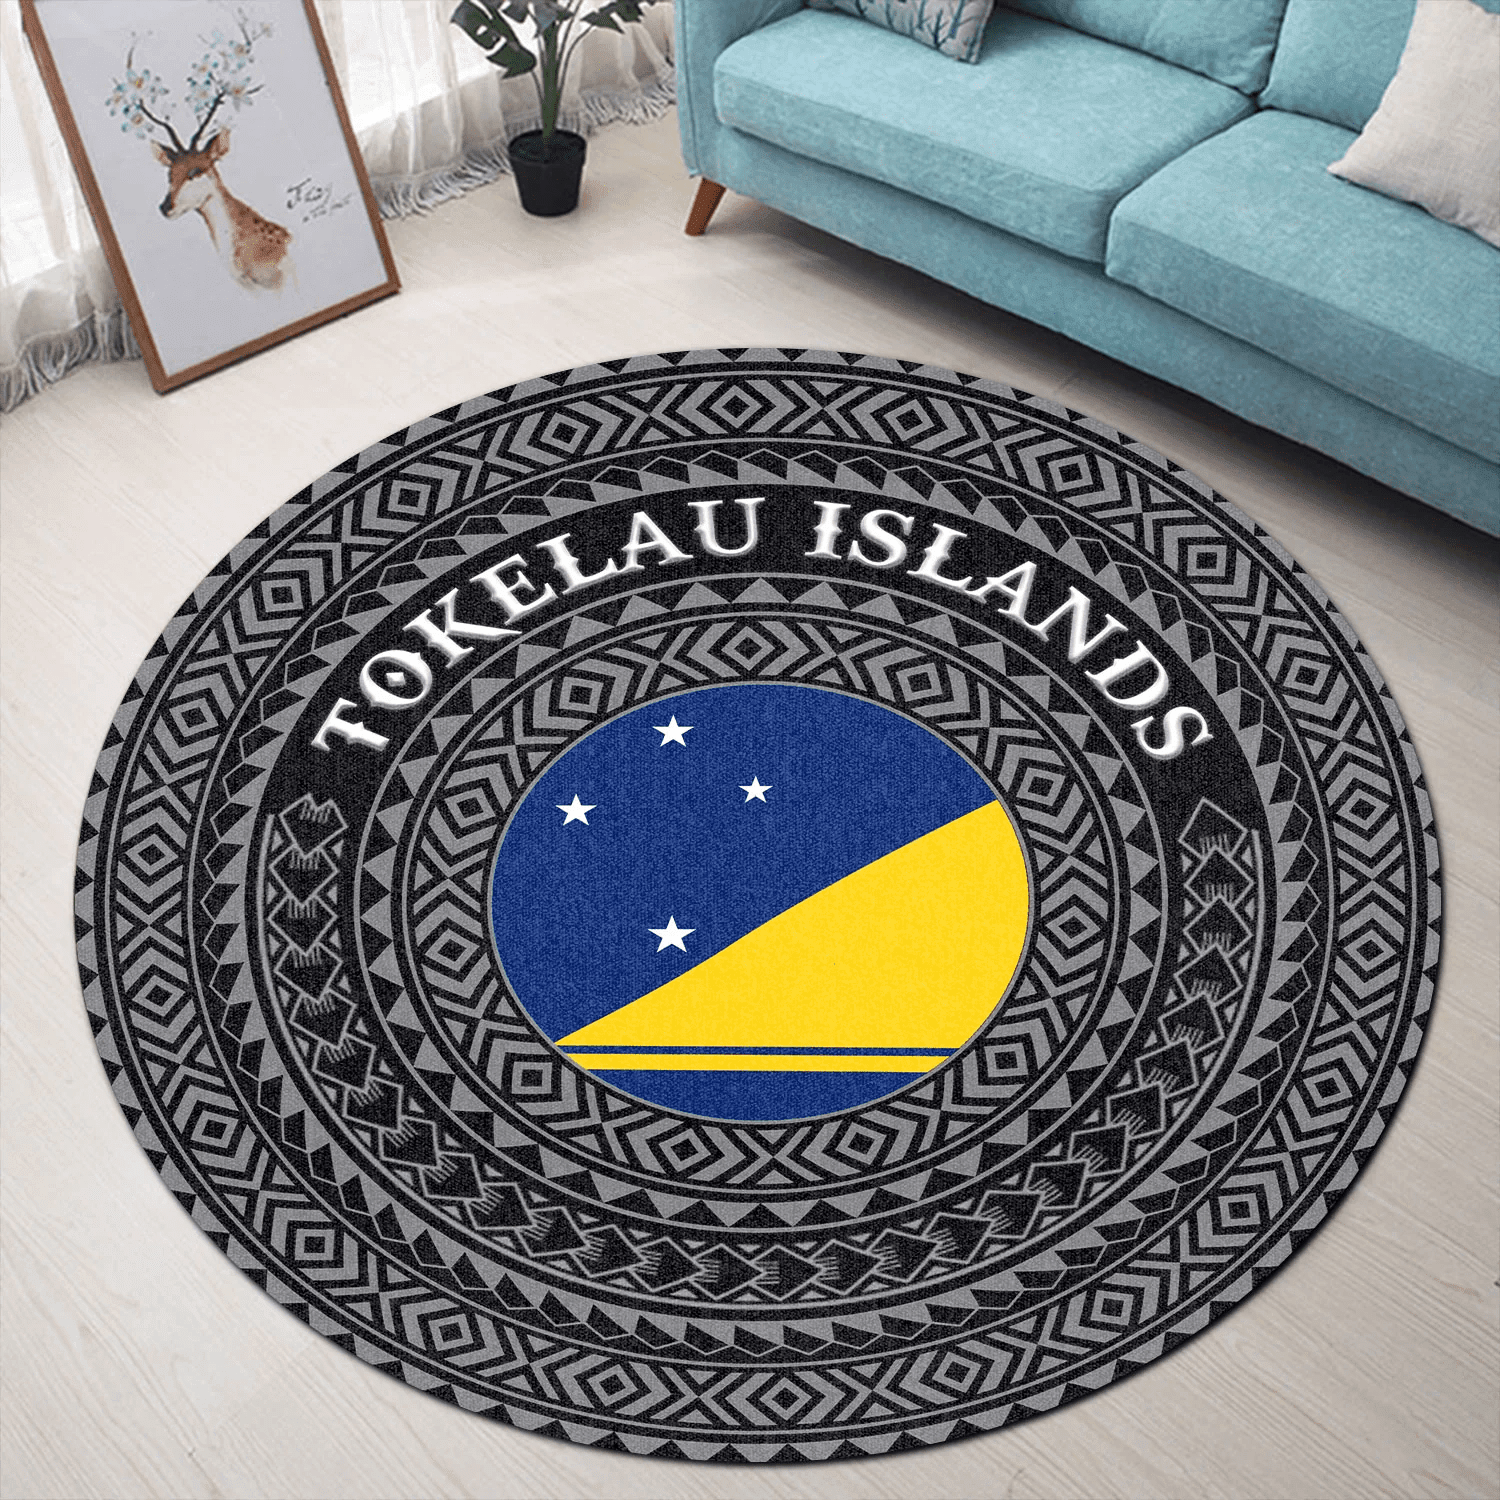 Love New Zealand Round Carpet - Tokelau Islands Flag Color A95